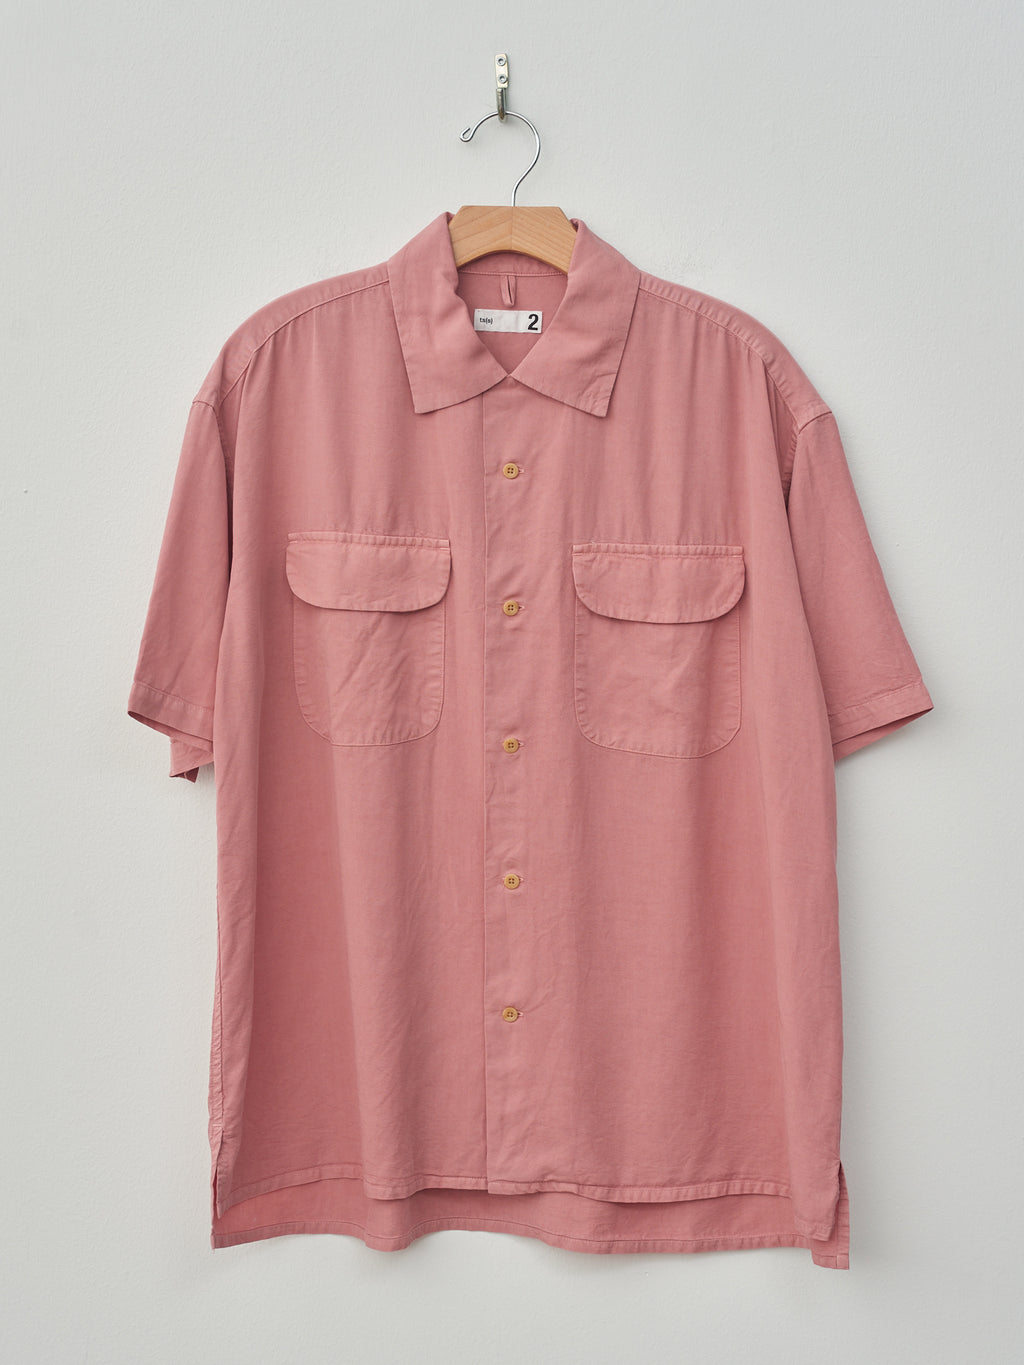 Namu Shop - ts(s) Garment Dye Round Flap Pocket S/S Shirt - Red